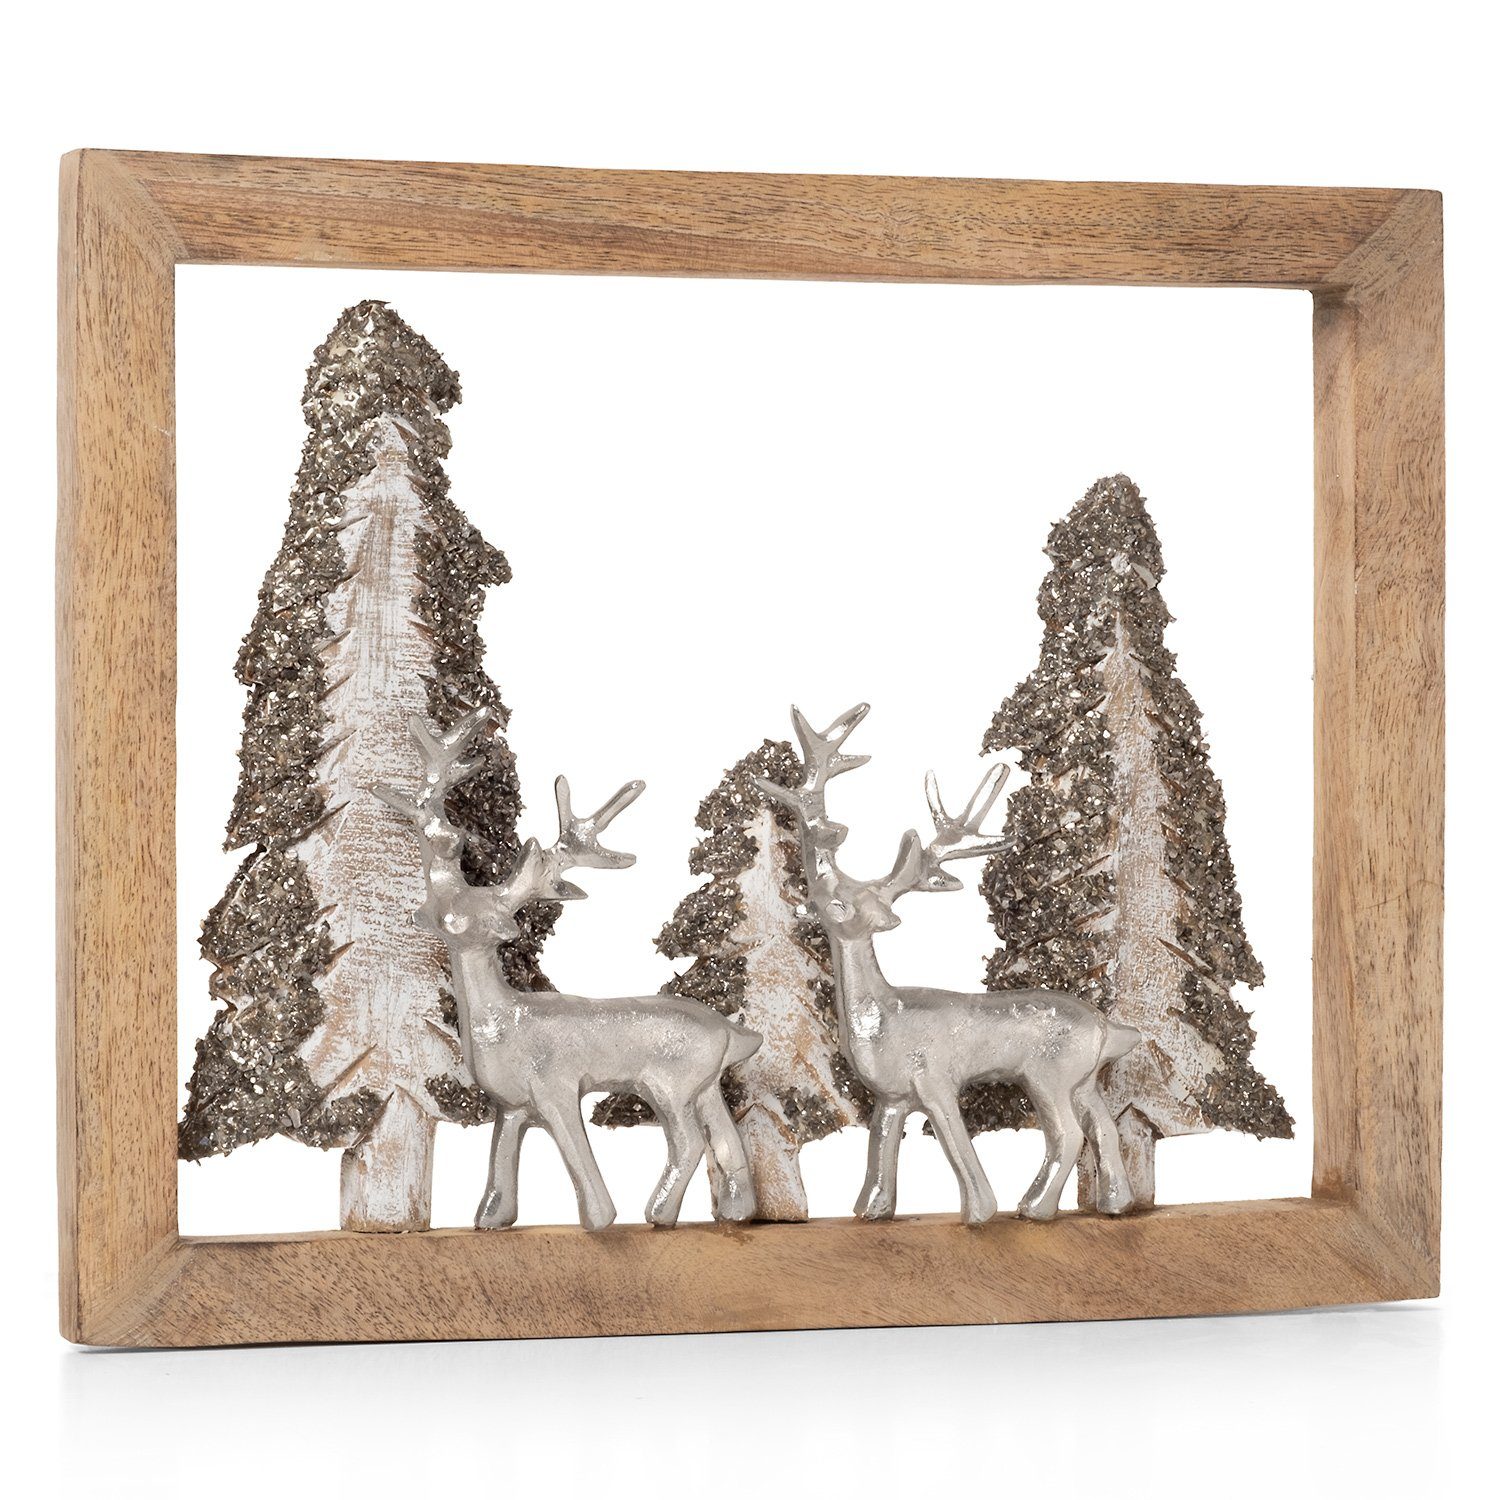 Moritz Skulptur Rentiere im Wald 30 cm im Rahmen, Holz, Tischdeko, Fensterdeko, Wanddeko, Holzdeko, Weihnachtsdeko | Skulpturen